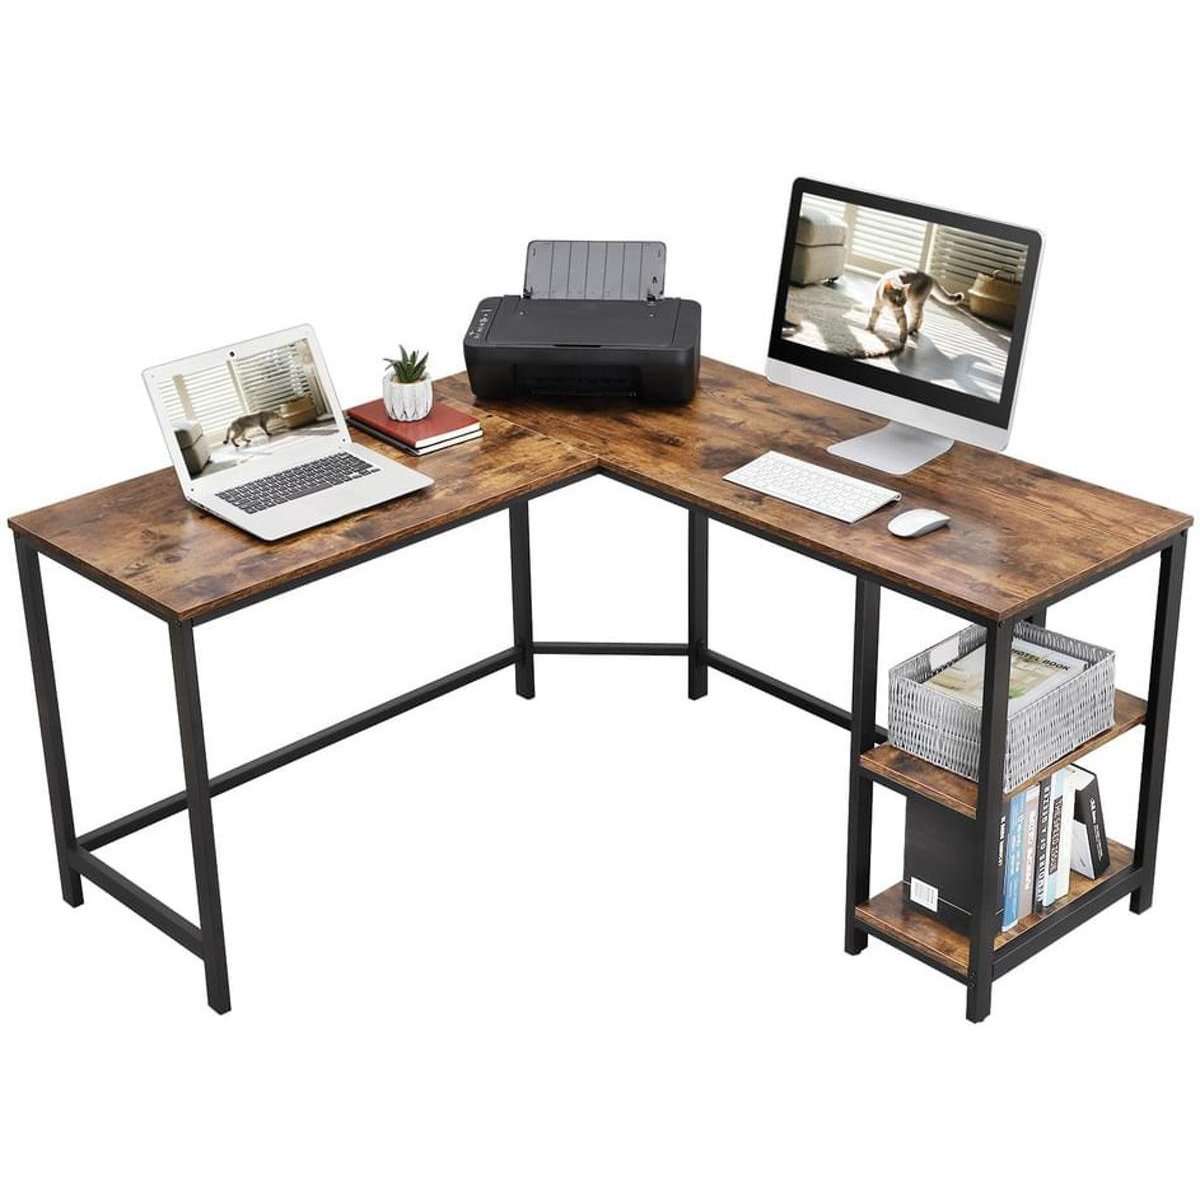 Nancy's Lenox Hill Desk - Work table - Office table - Desks 138 x 138 x 75 cm